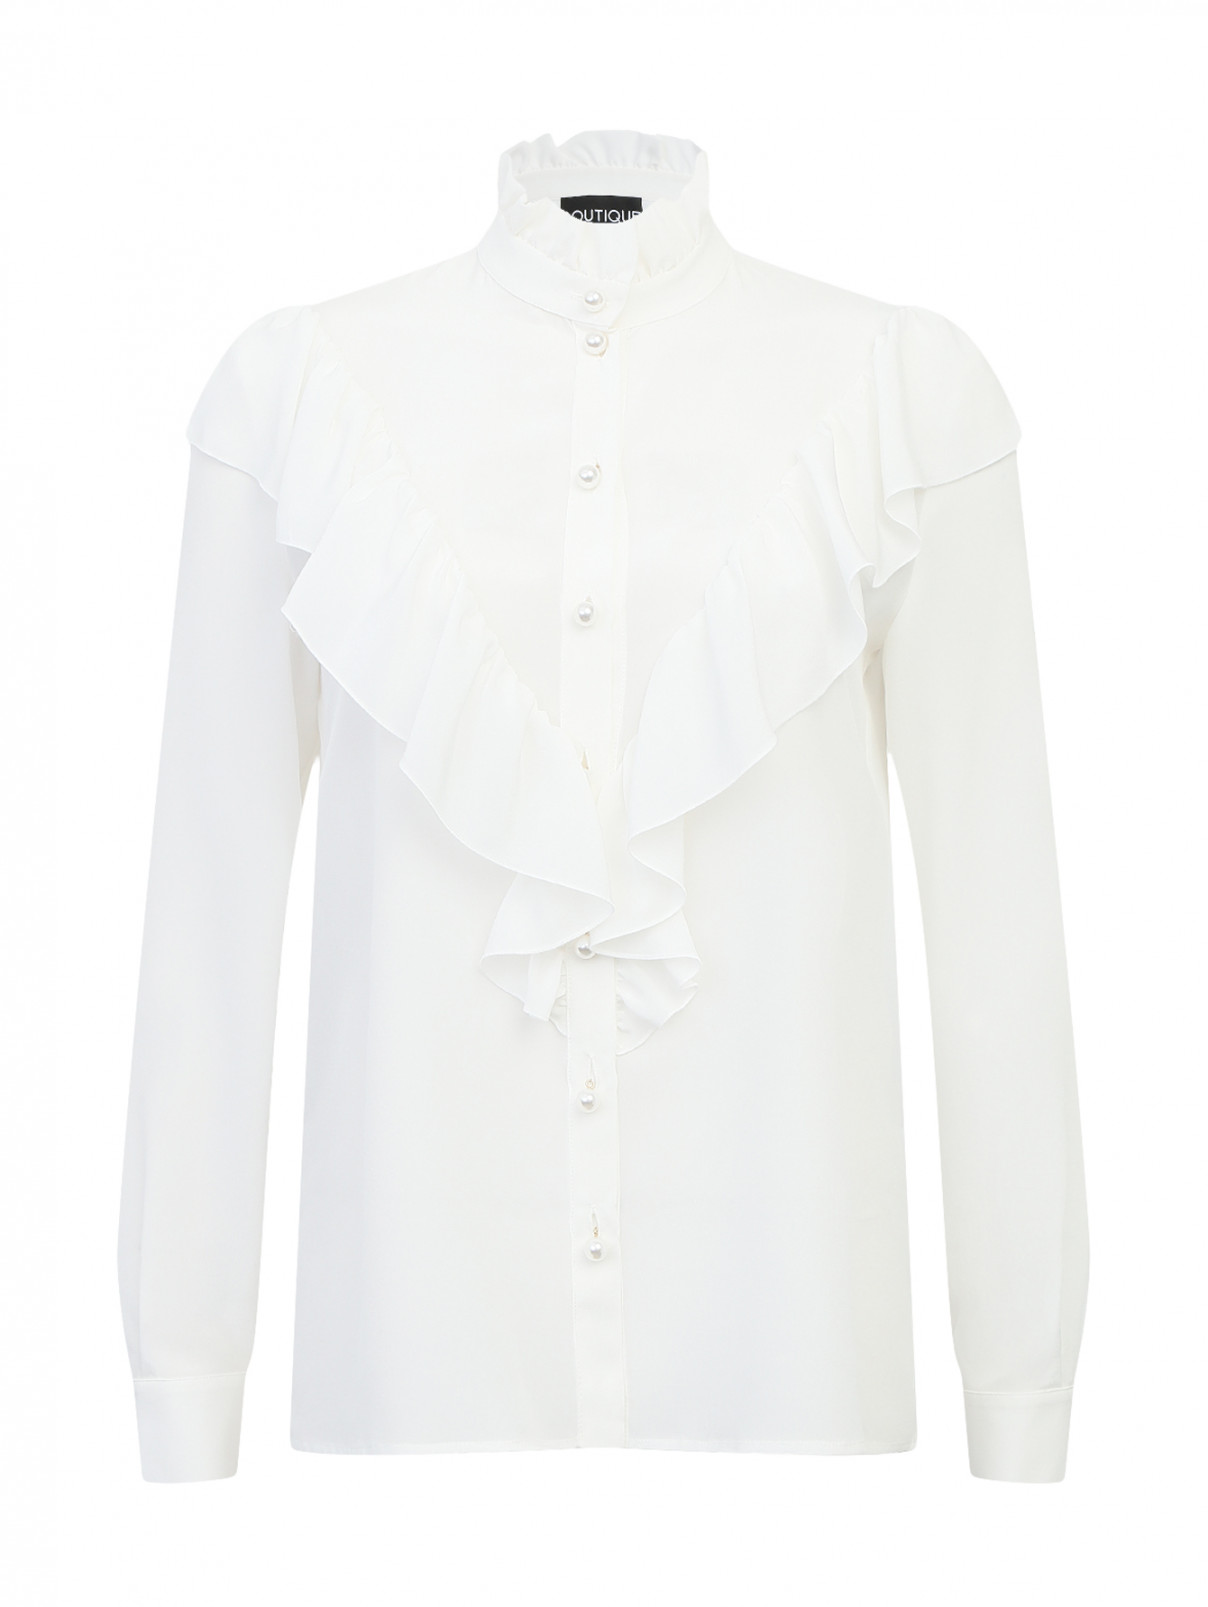 Блуза из шелка с жабо Moschino Boutique  –  Общий вид  – Цвет:  Белый